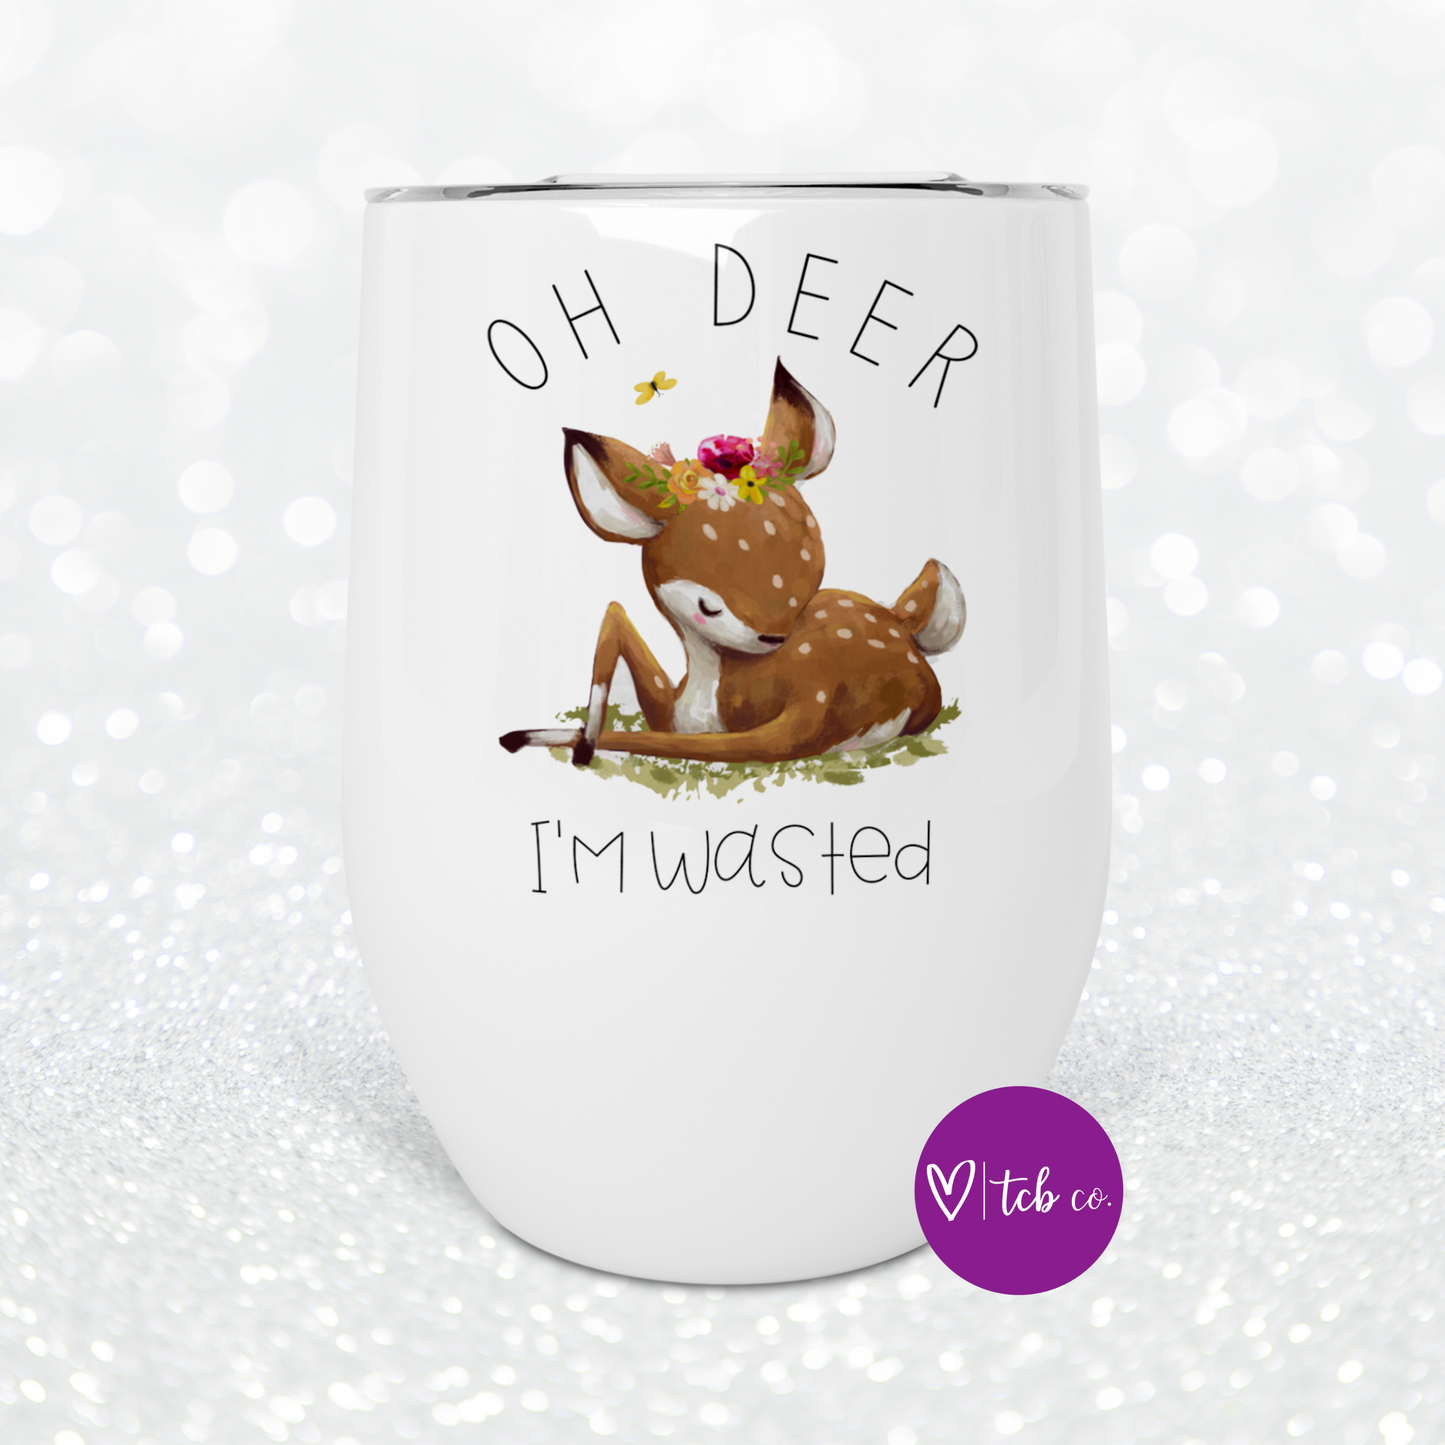 Oh Deer I'm Wasted Wine Tumbler